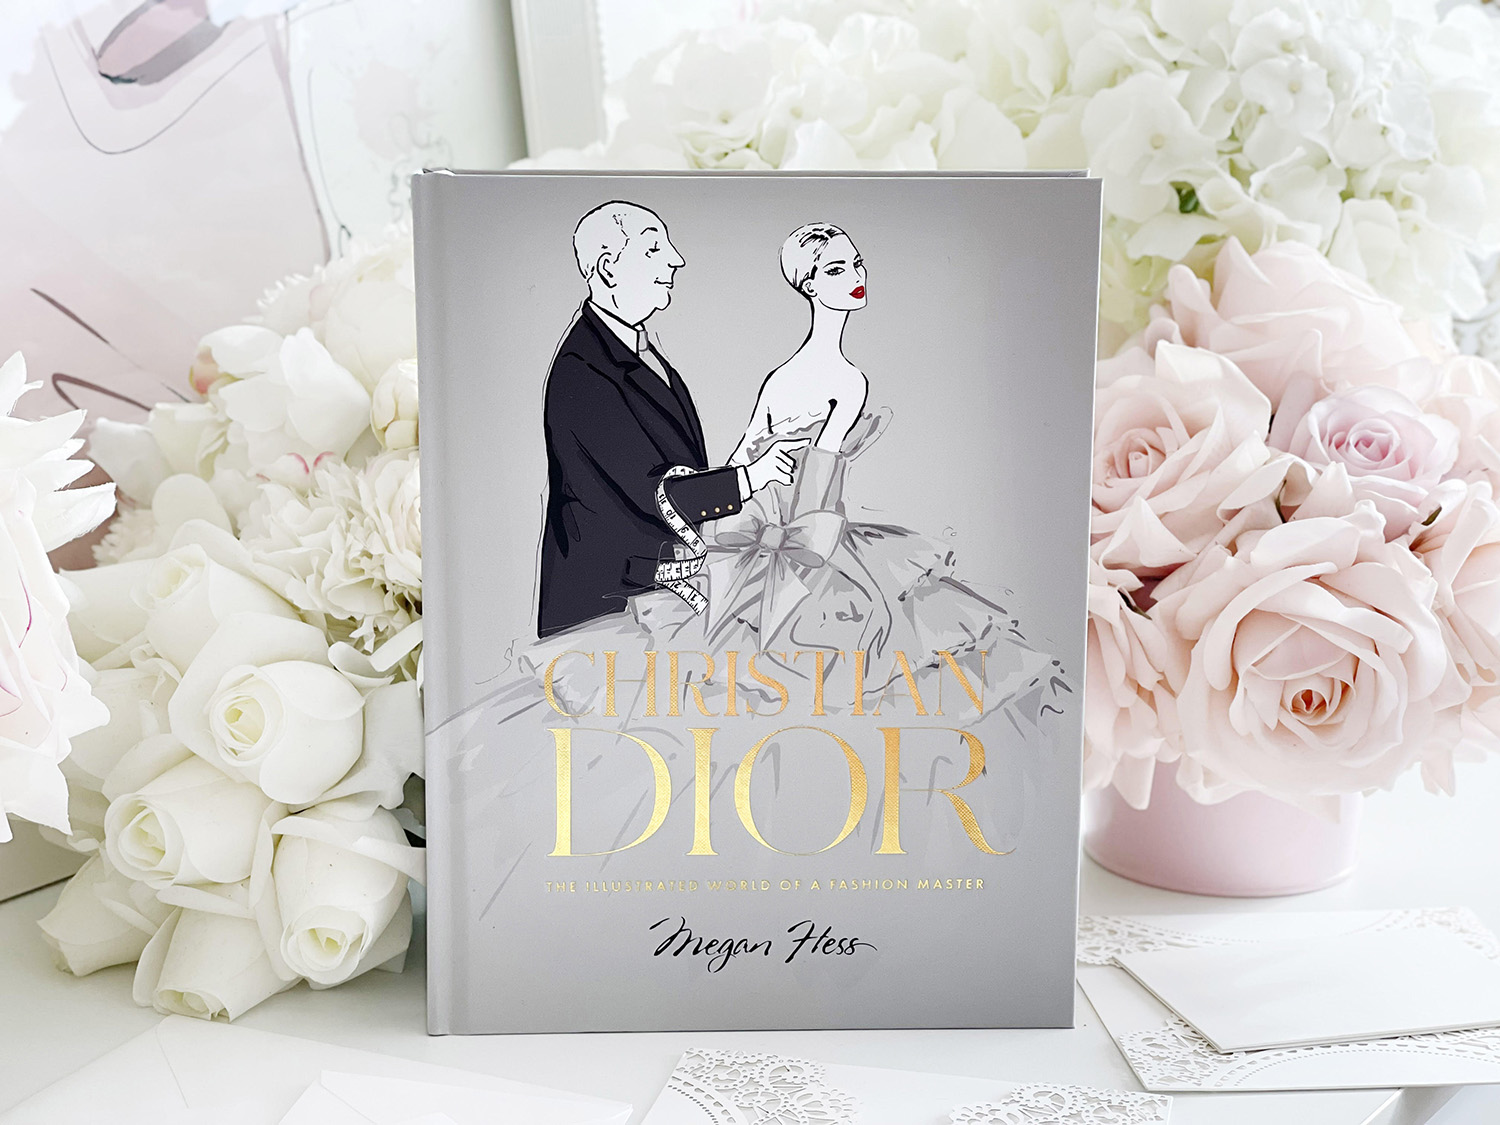 Christian Dior [Book]